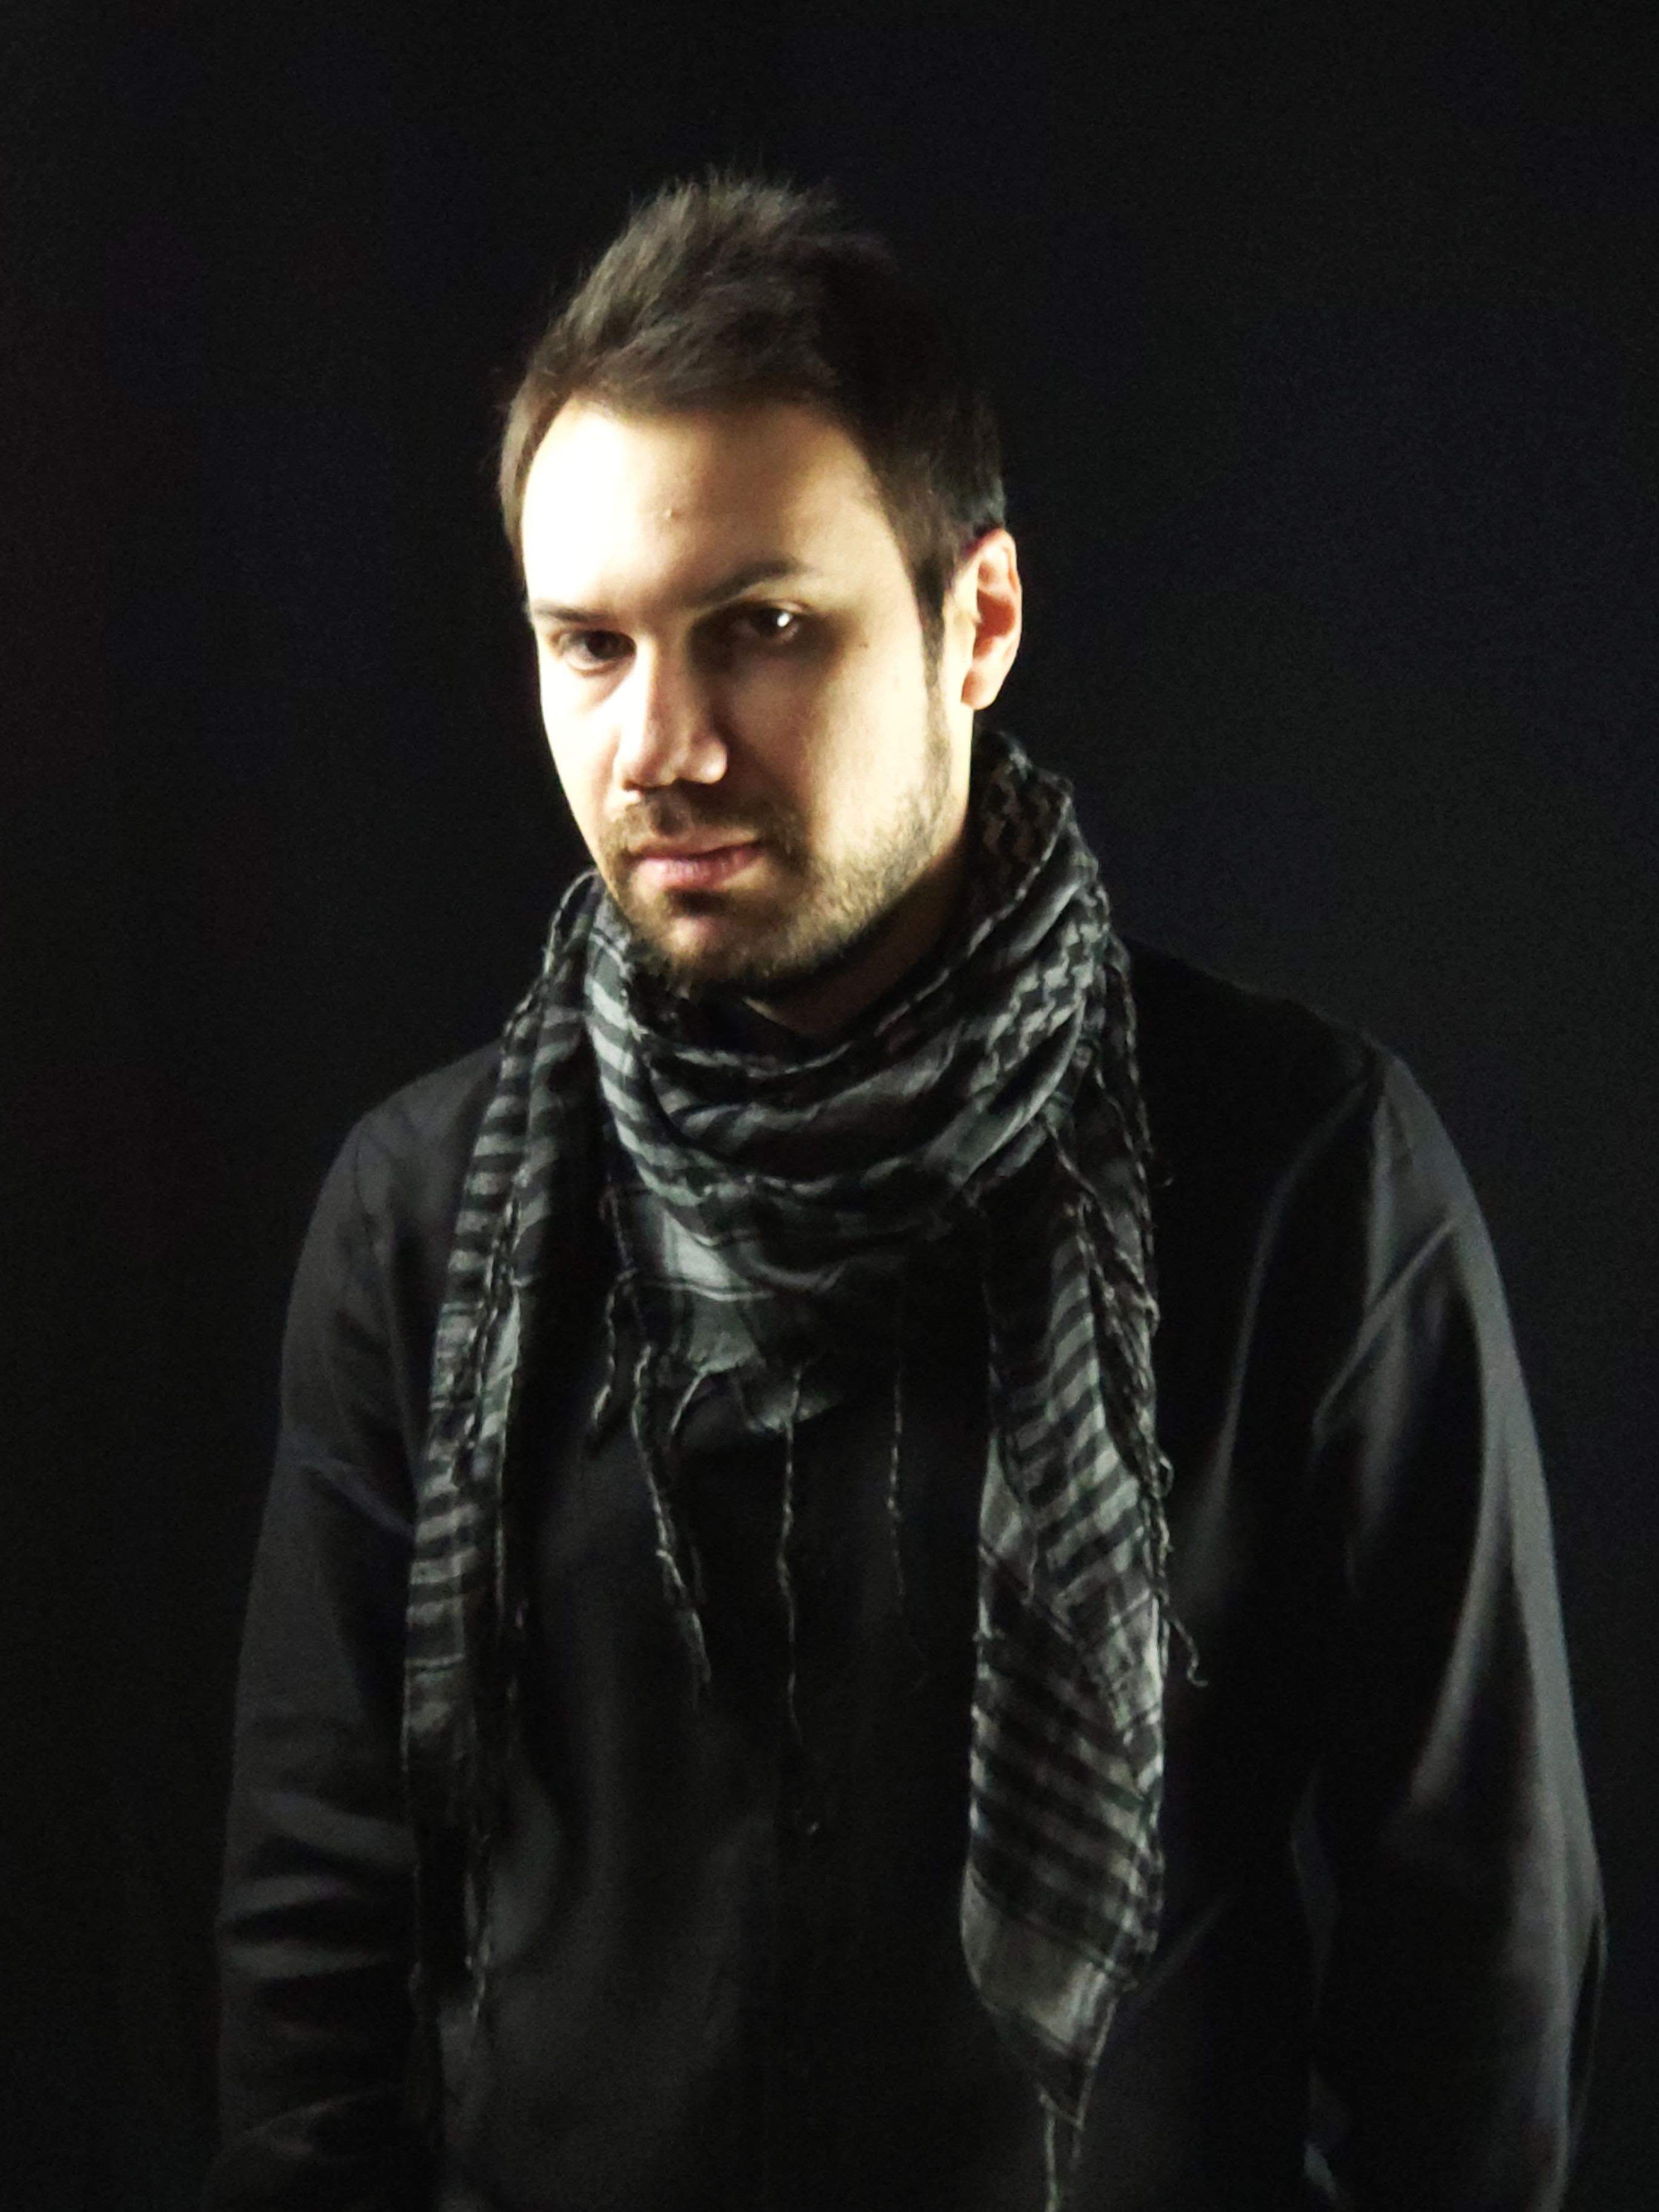 Adrian Benegas (Tragul) confirma la fecha de su álbum debut "THE REVENANT"